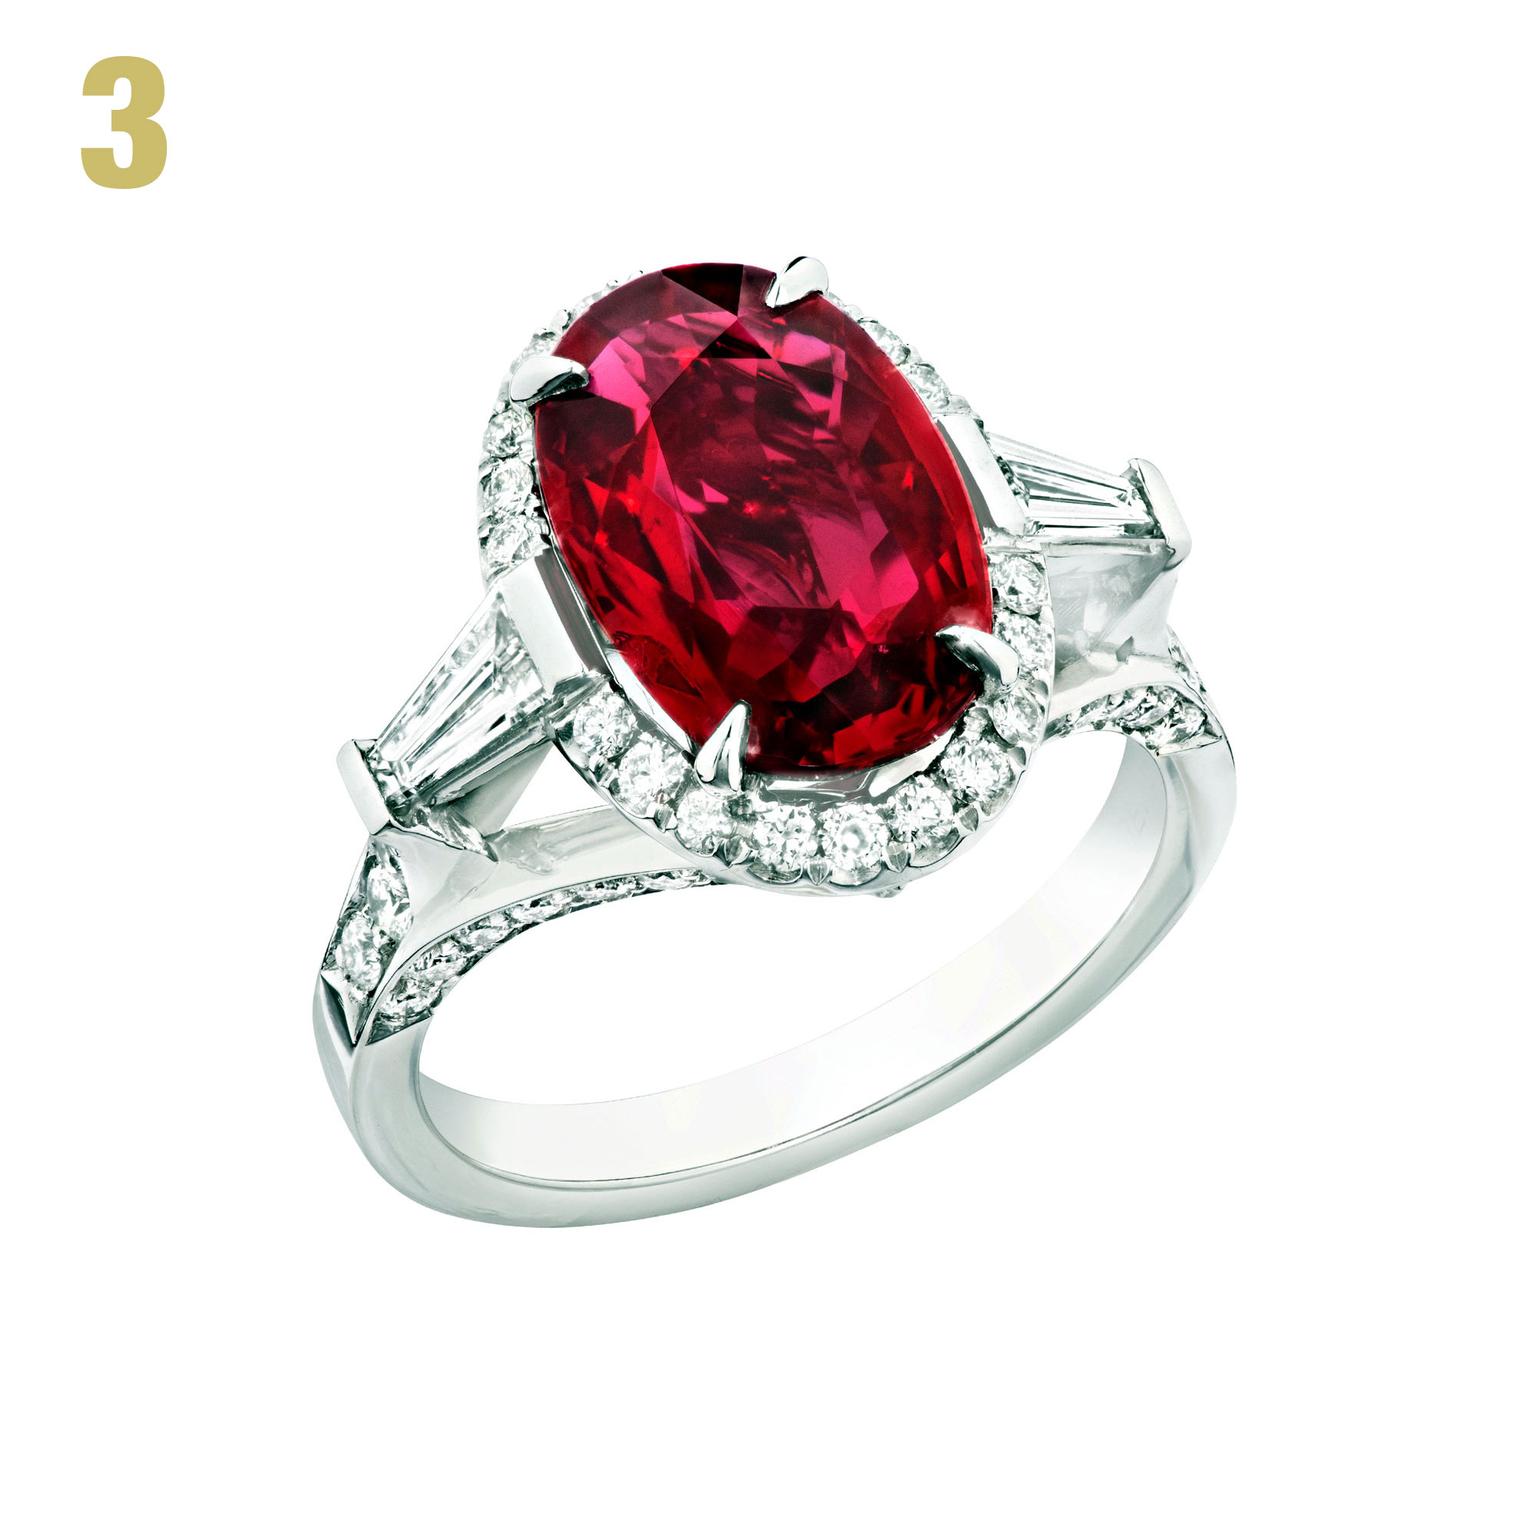 Fabergé Devotion ruby ring